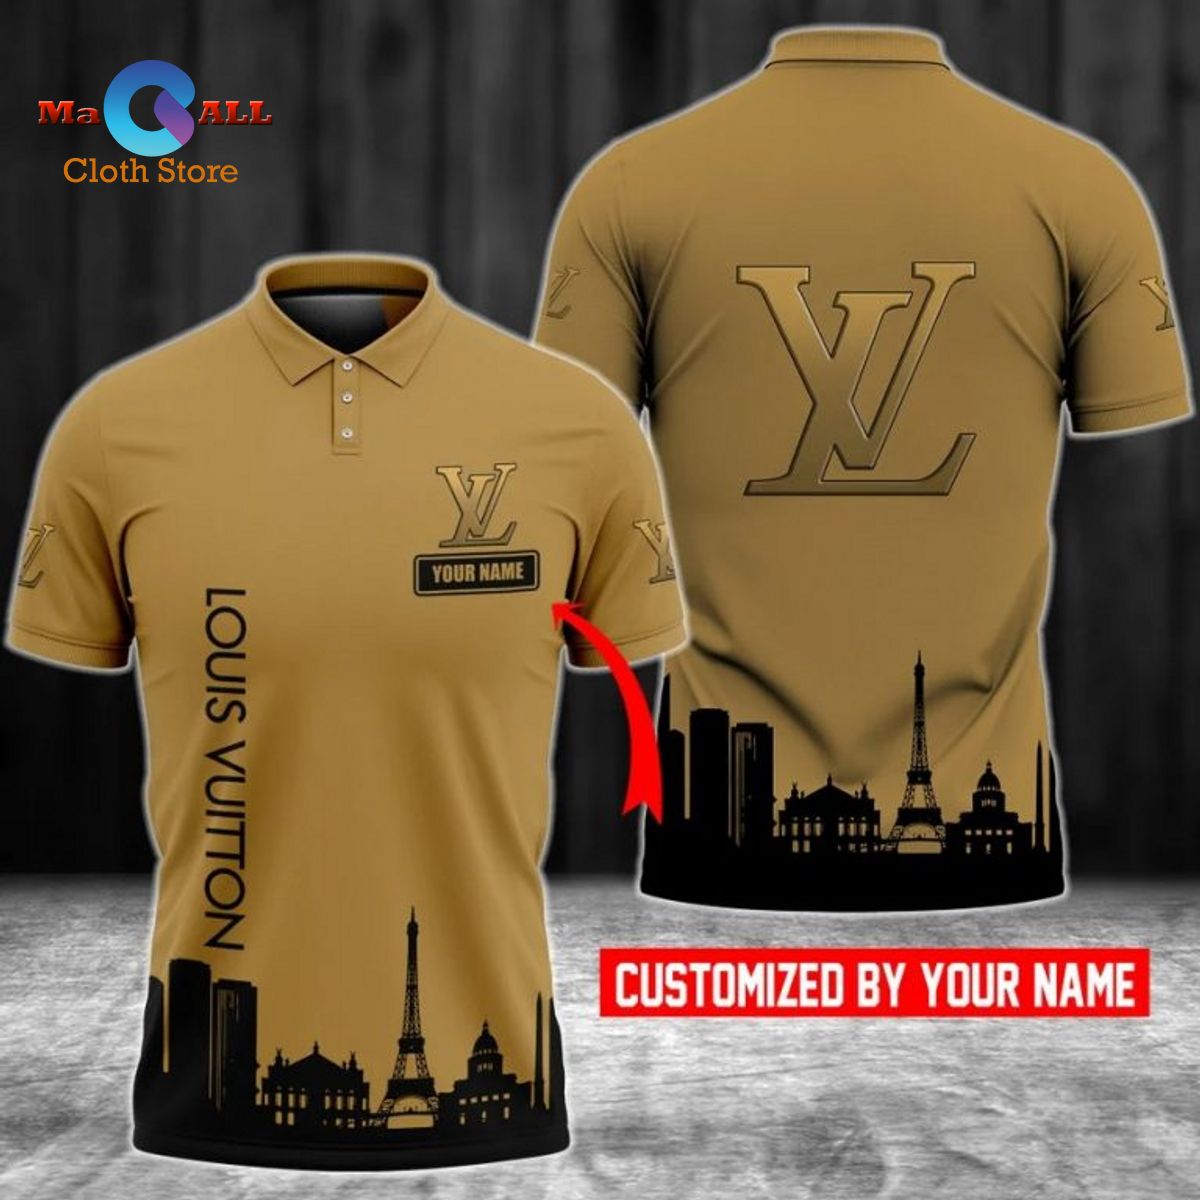 NEW] Louis Vuitton Luxury Premium For Men LV Polo Shirt - Macall